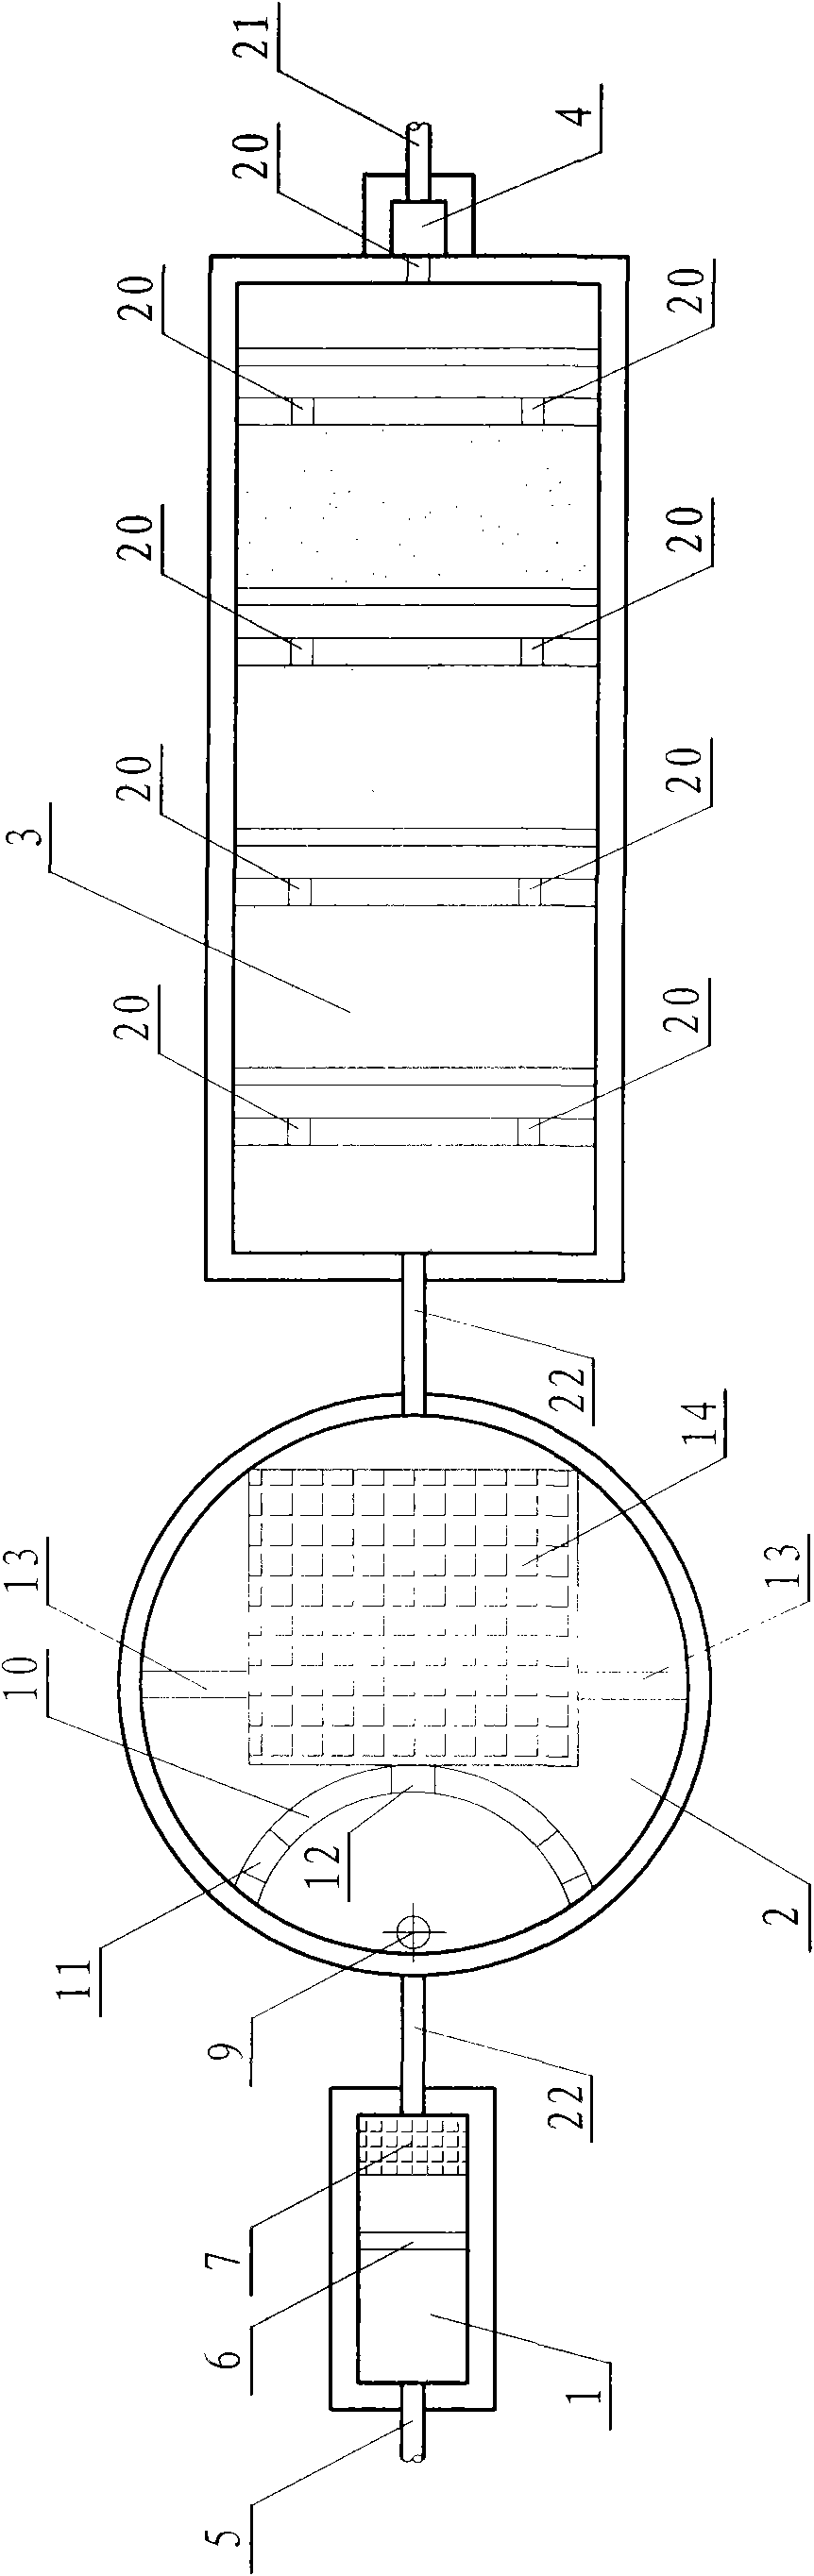 Domestic sewage treatment device